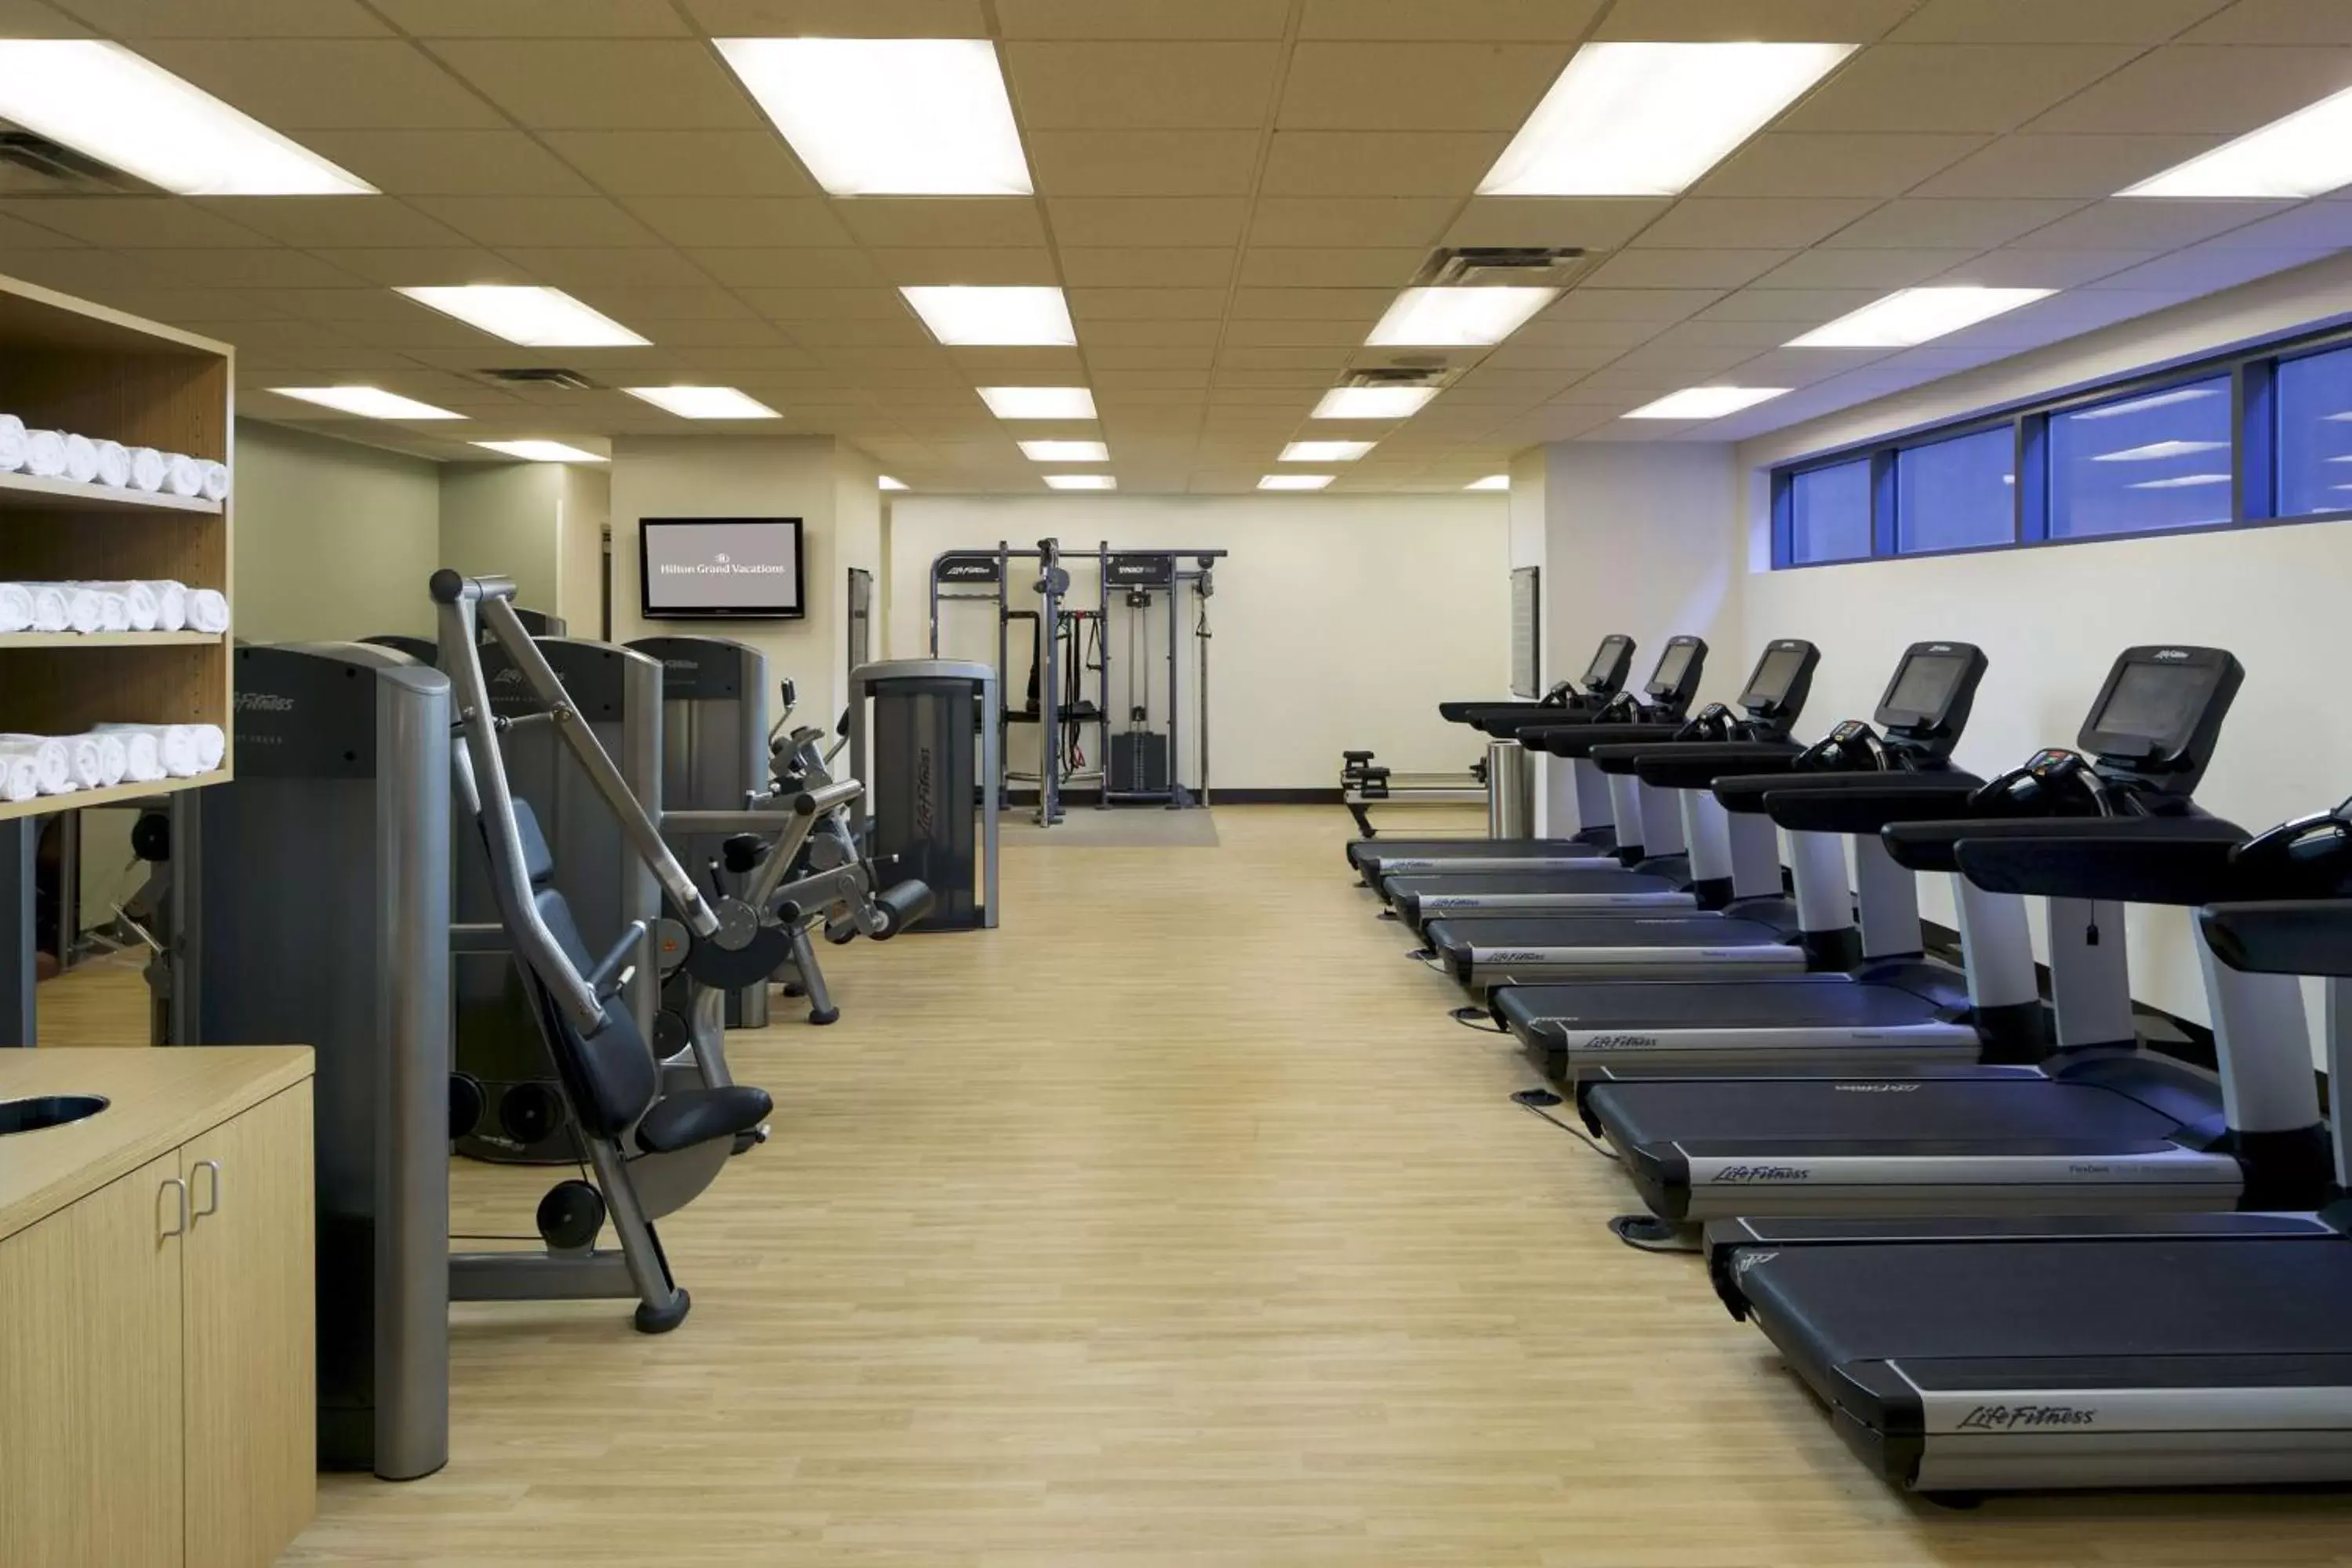 Fitness centre/facilities, Fitness Center/Facilities in Hilton Grand Vacations Club Elara Center Strip Las Vegas